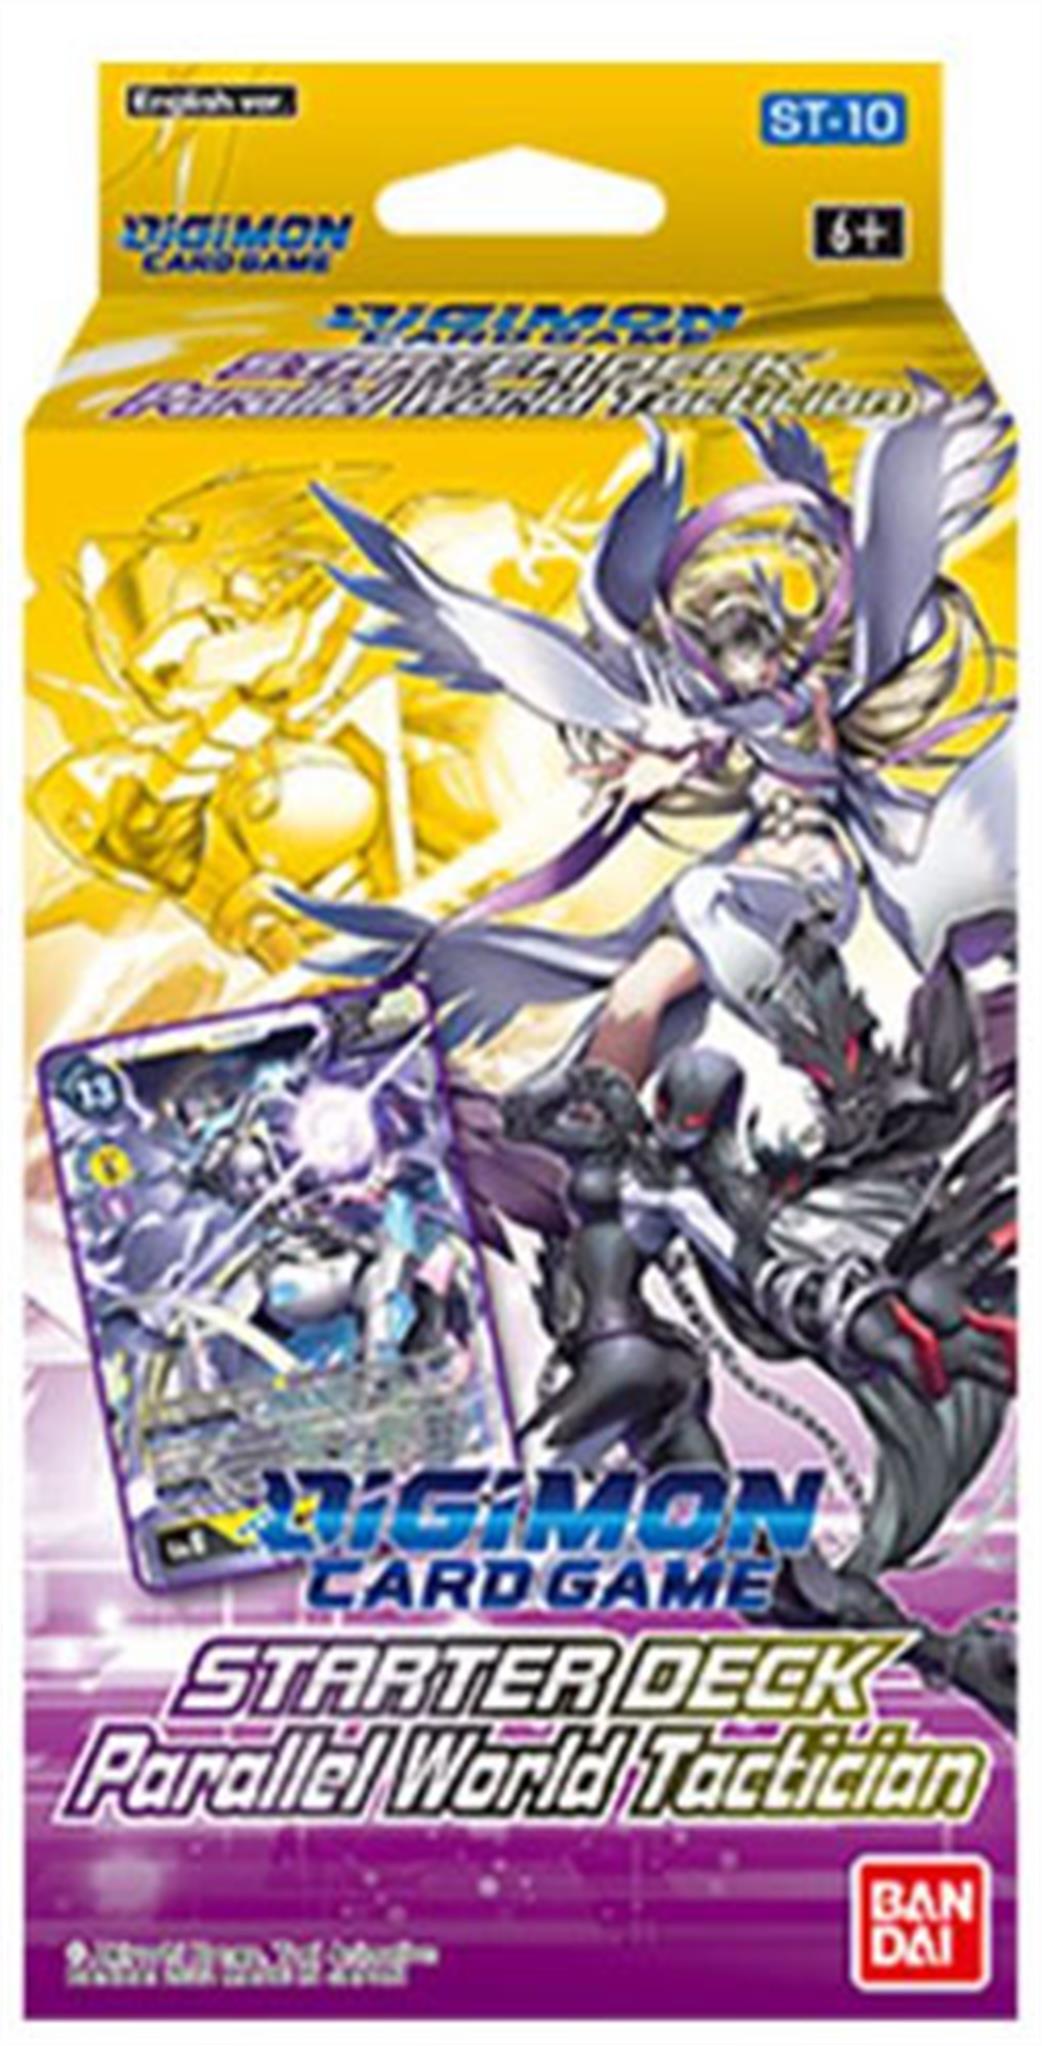 Bandai  ST-10 Digimon Parallel World Tactician Starter Deck